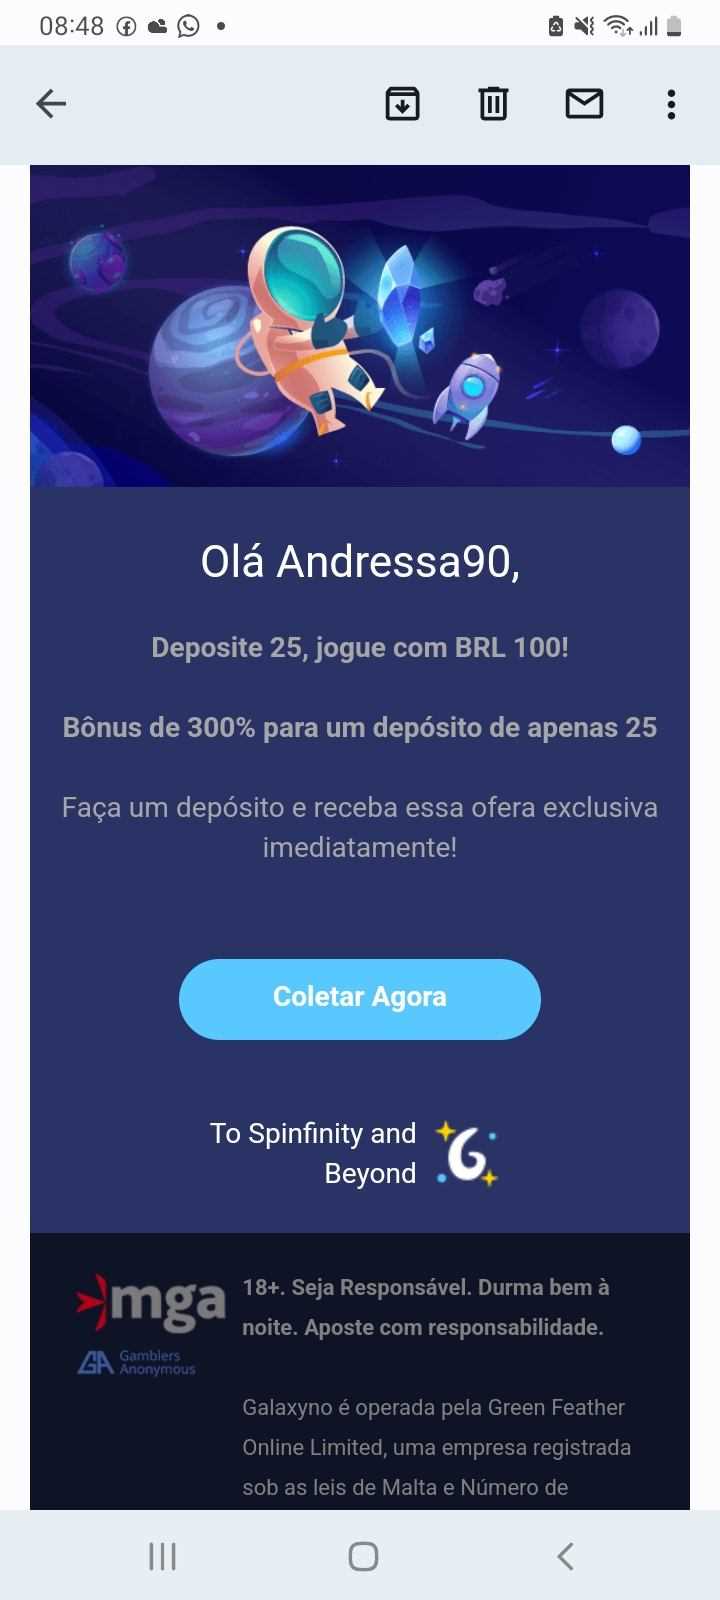 Casas de Apostas Brasil galaxyno free spins